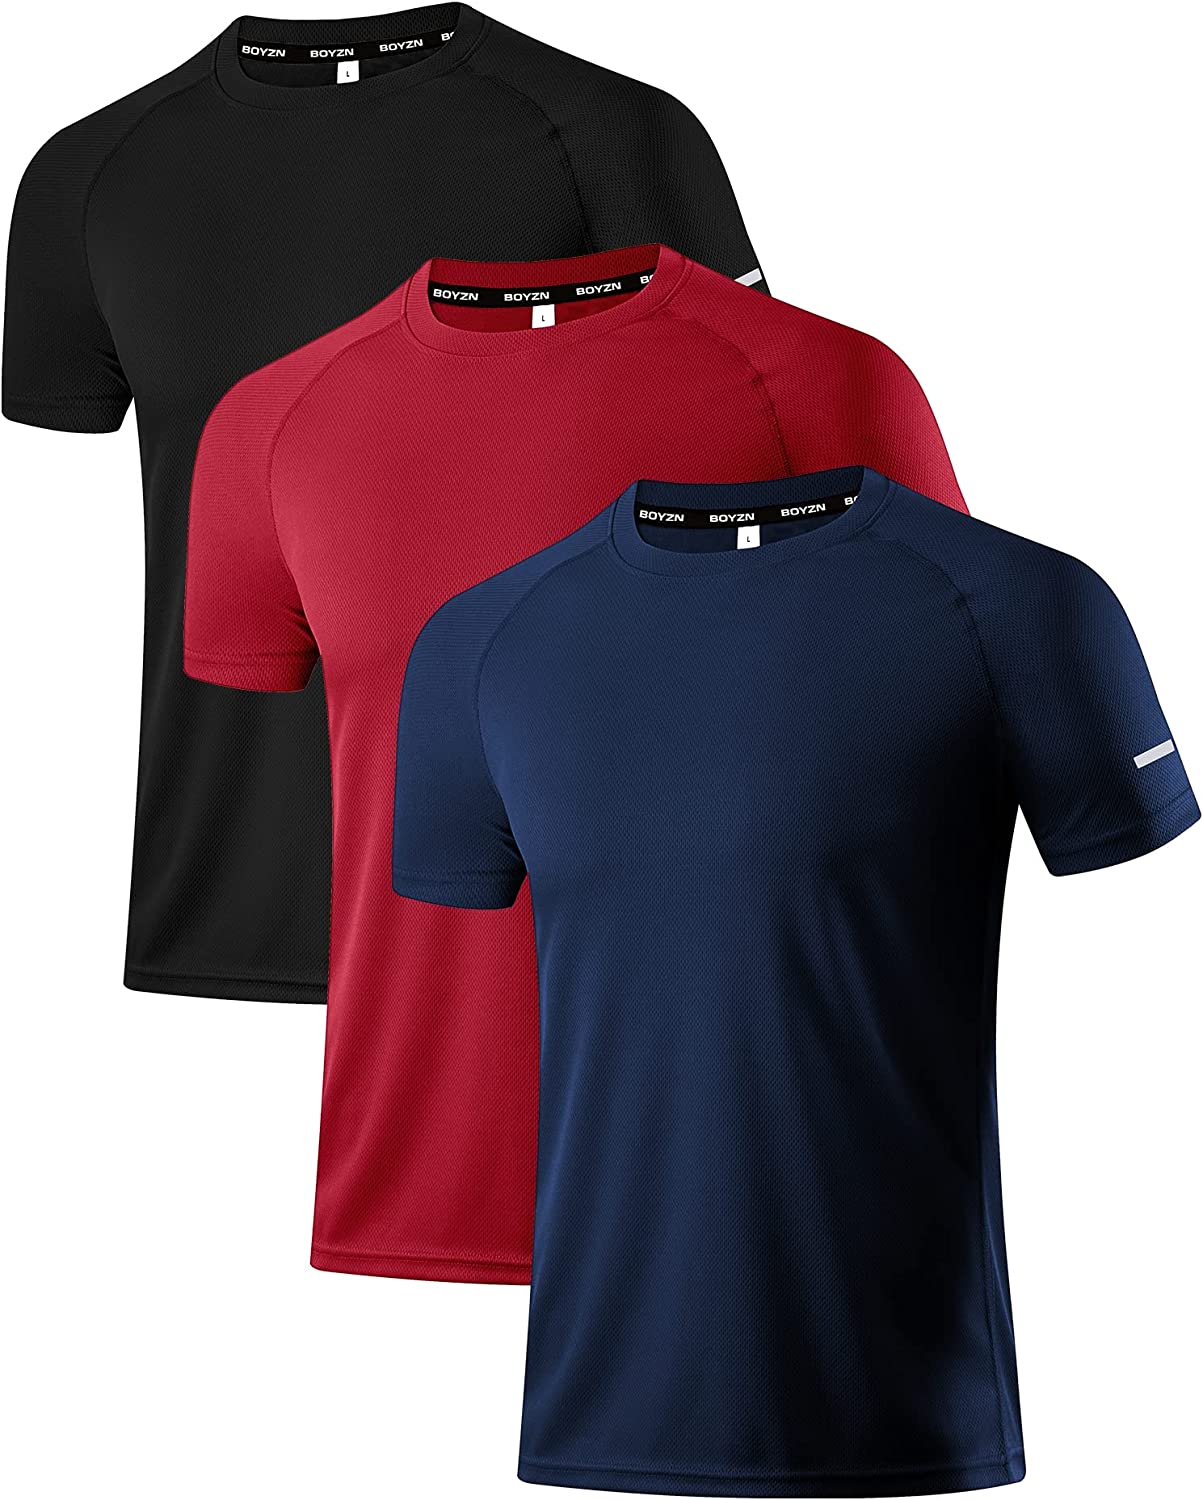 Holure Men's Sports Running Set (Pack of 4) Athletic Shirt+Short